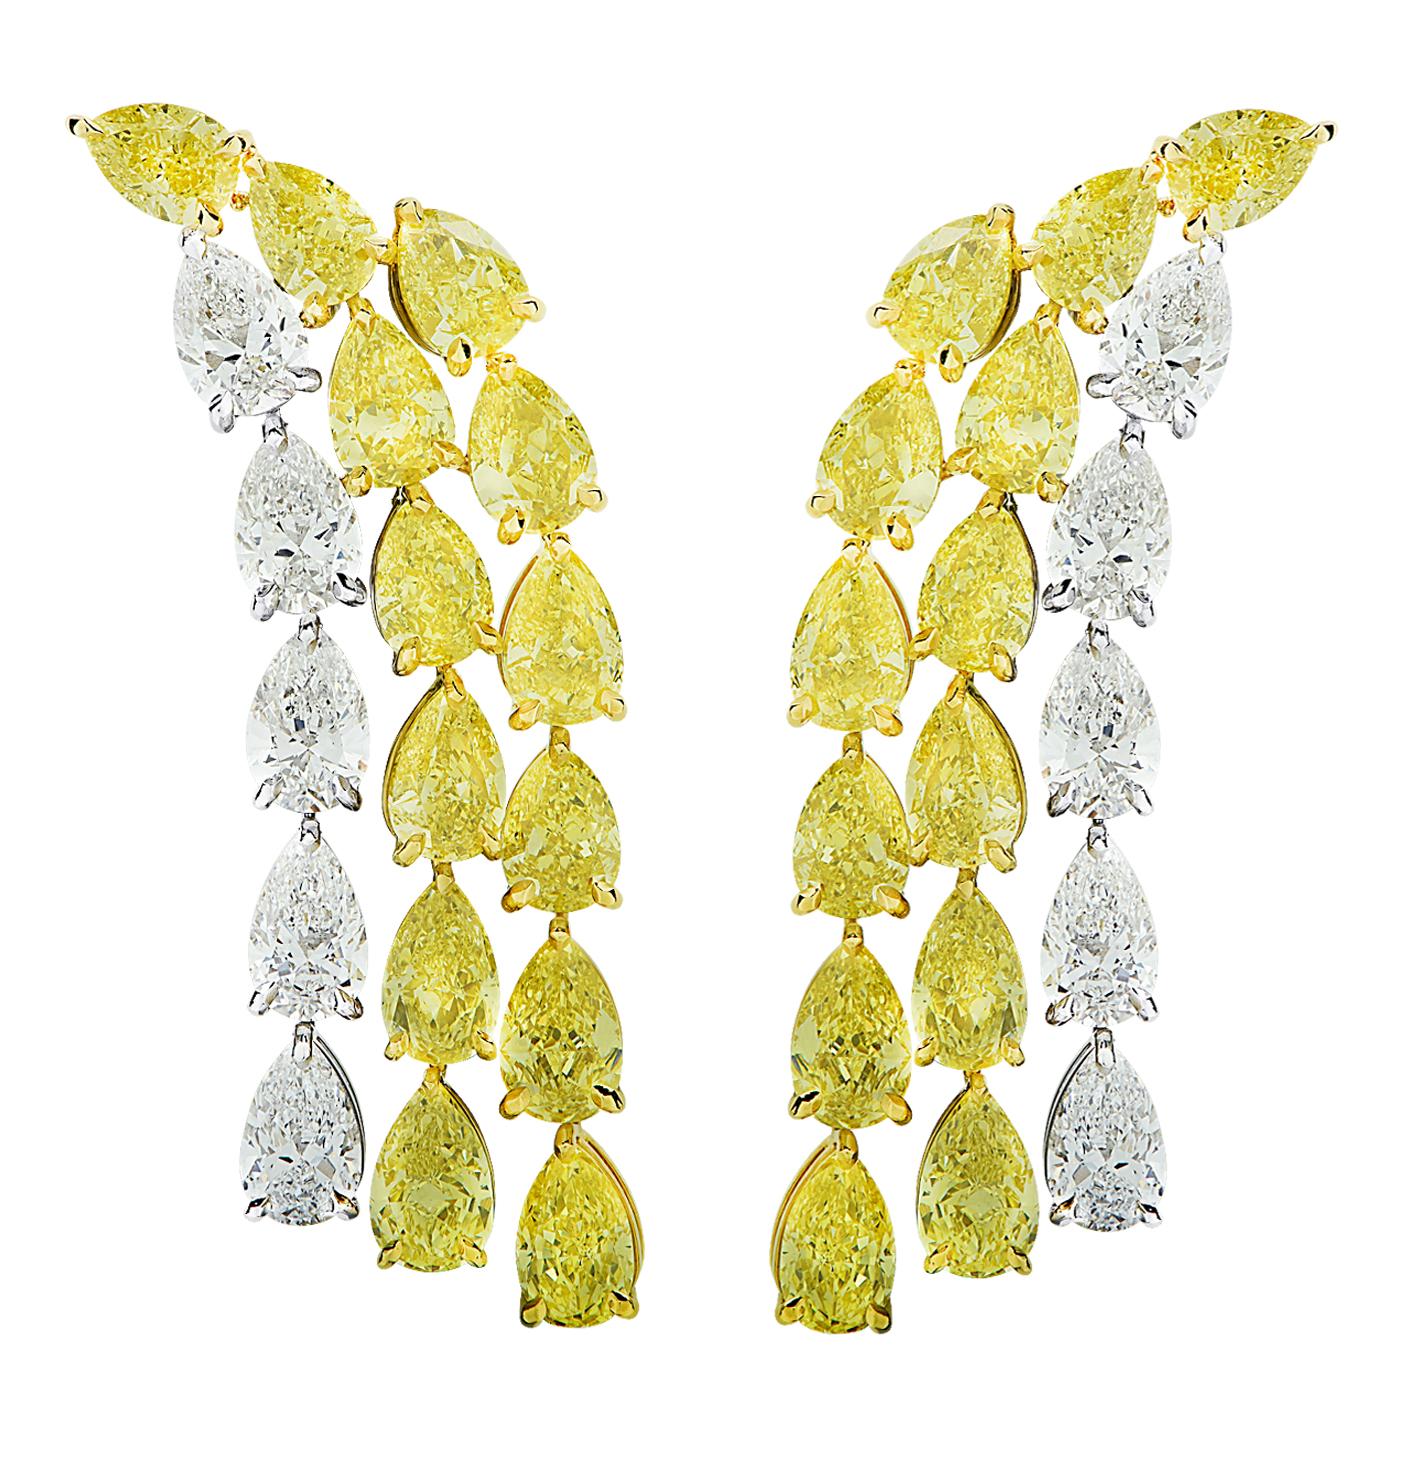 Contemporary Vivid Diamonds GIA Certified 19.64 Carat Fancy Intense Yellow Pear Shape Diamond For Sale